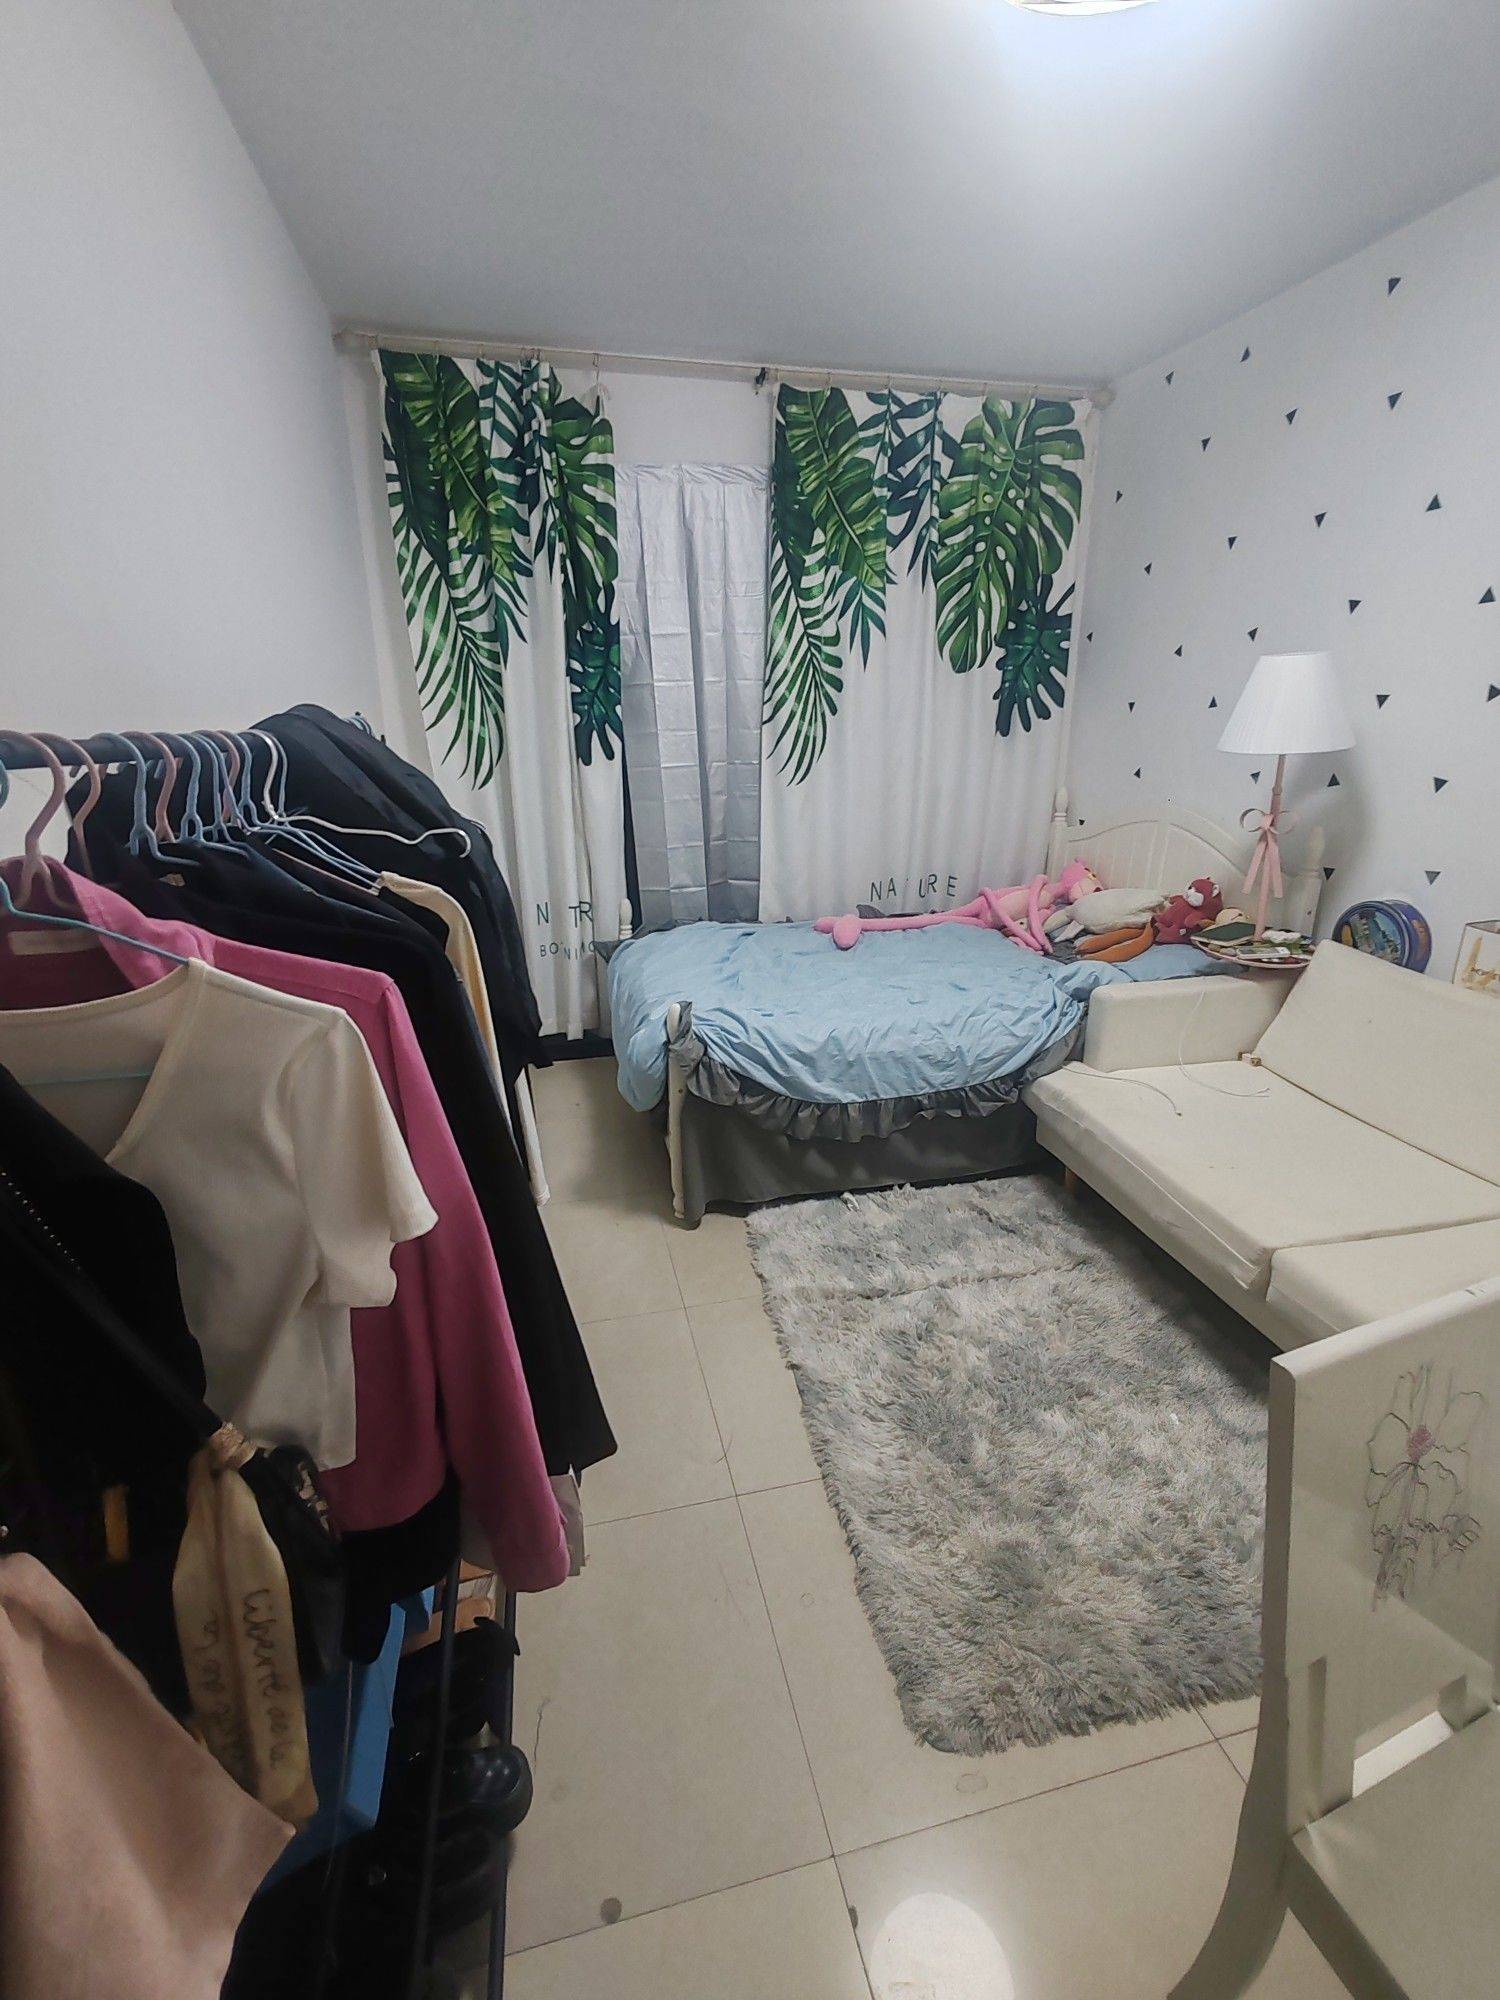 Xi'An-Beilin-Cozy Home,Clean&Comfy,No Gender Limit,Hustle & Bustle,“Friends”,Chilled,LGBTQ Friendly